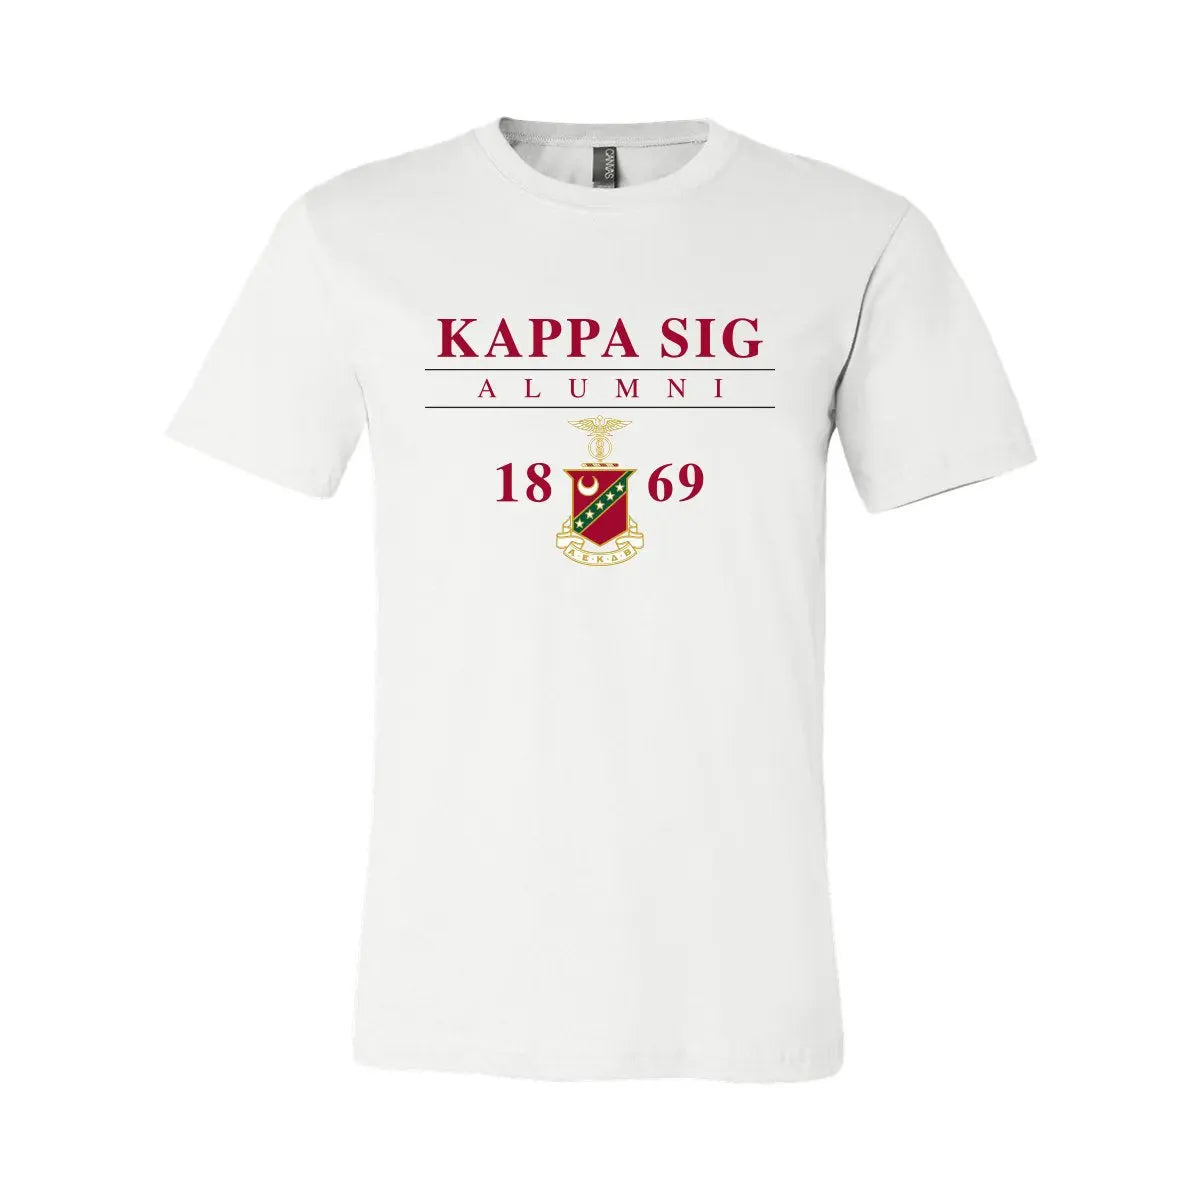 Kappa Sig Alumni Crest Short Sleeve Tee - Kappa Sigma Official Store